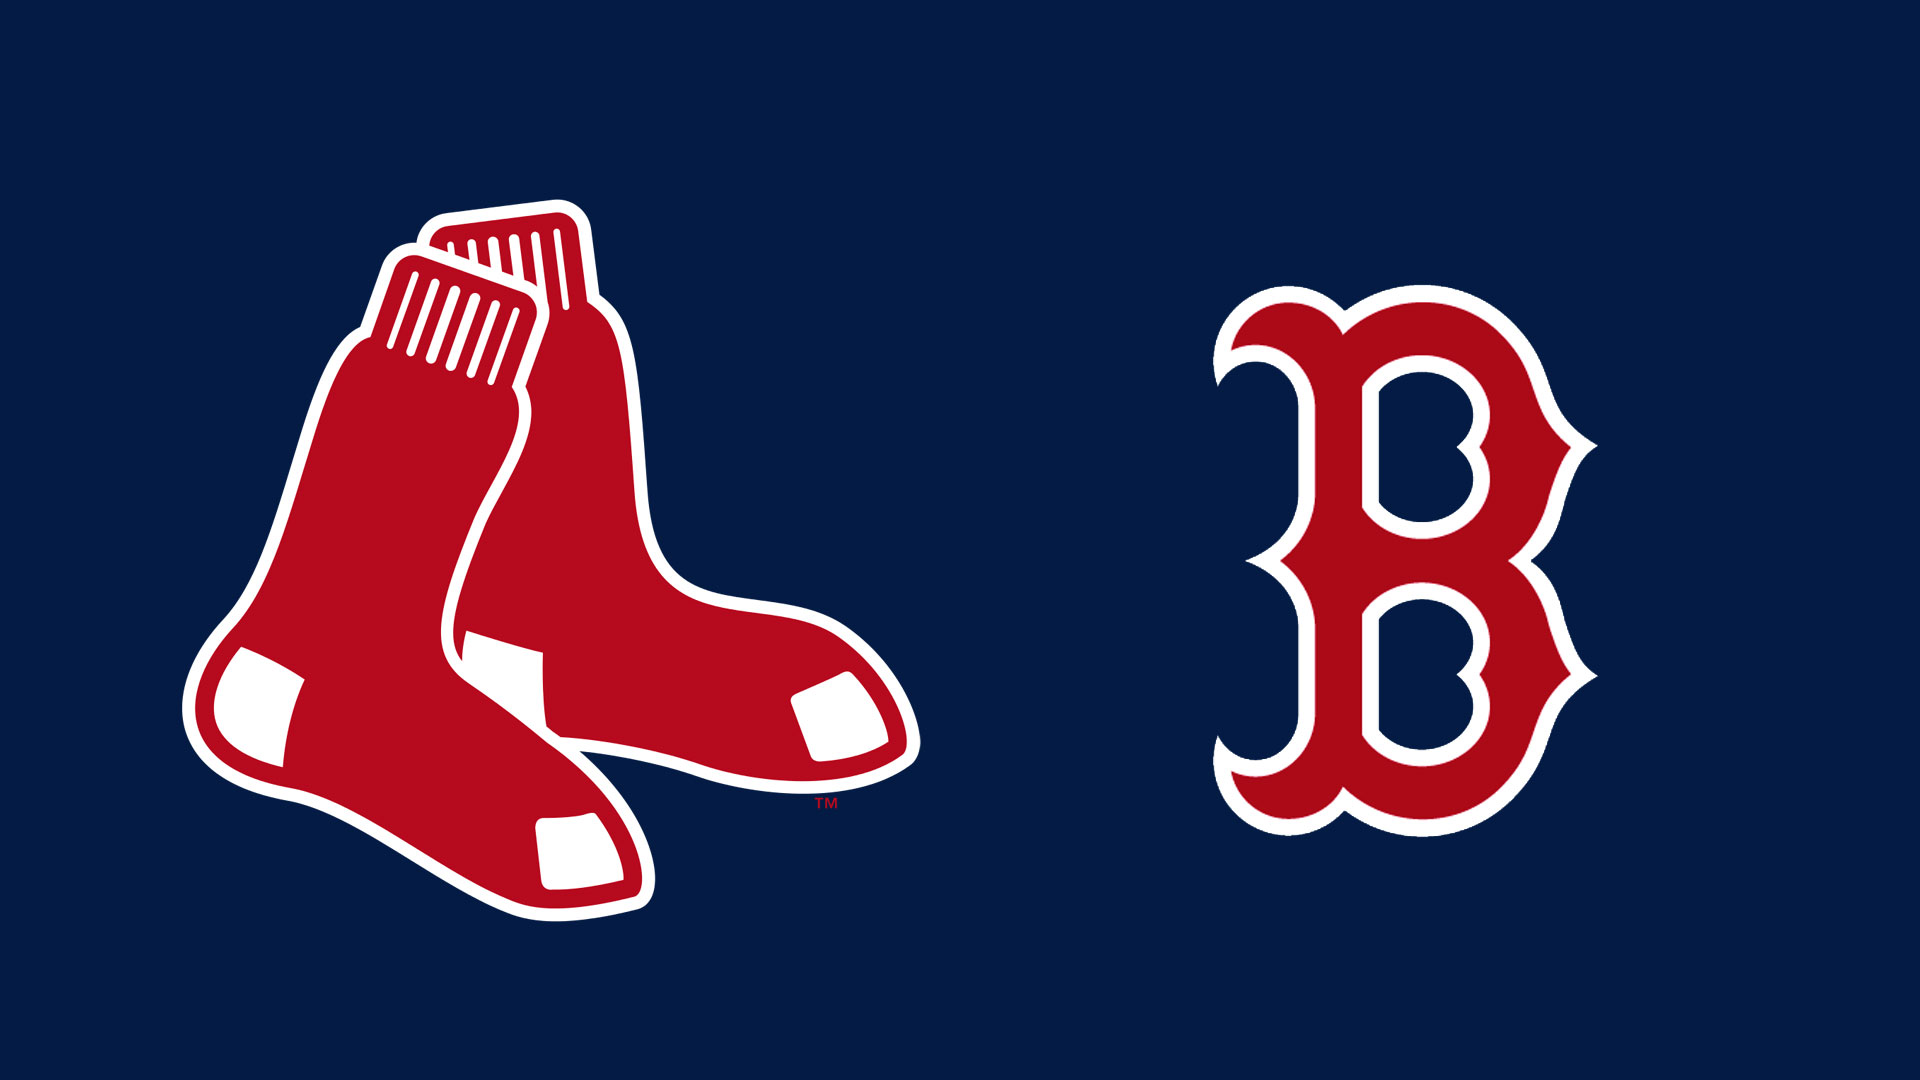 Boston Sports Wallpaper - Red Sox Logo Sox - HD Wallpaper 